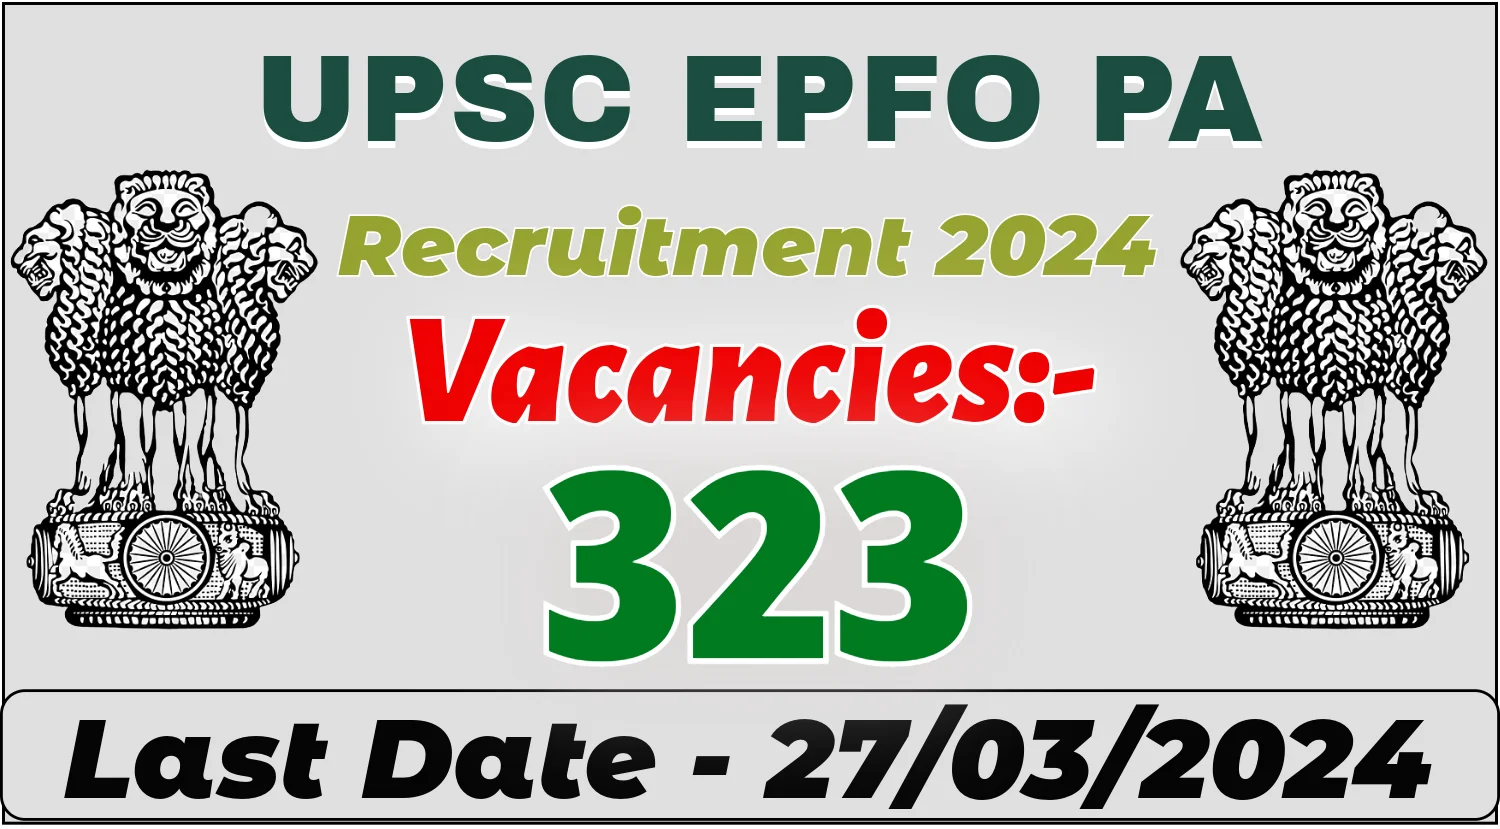 UPSC EPFO Personal Assistant Recruitment 2024